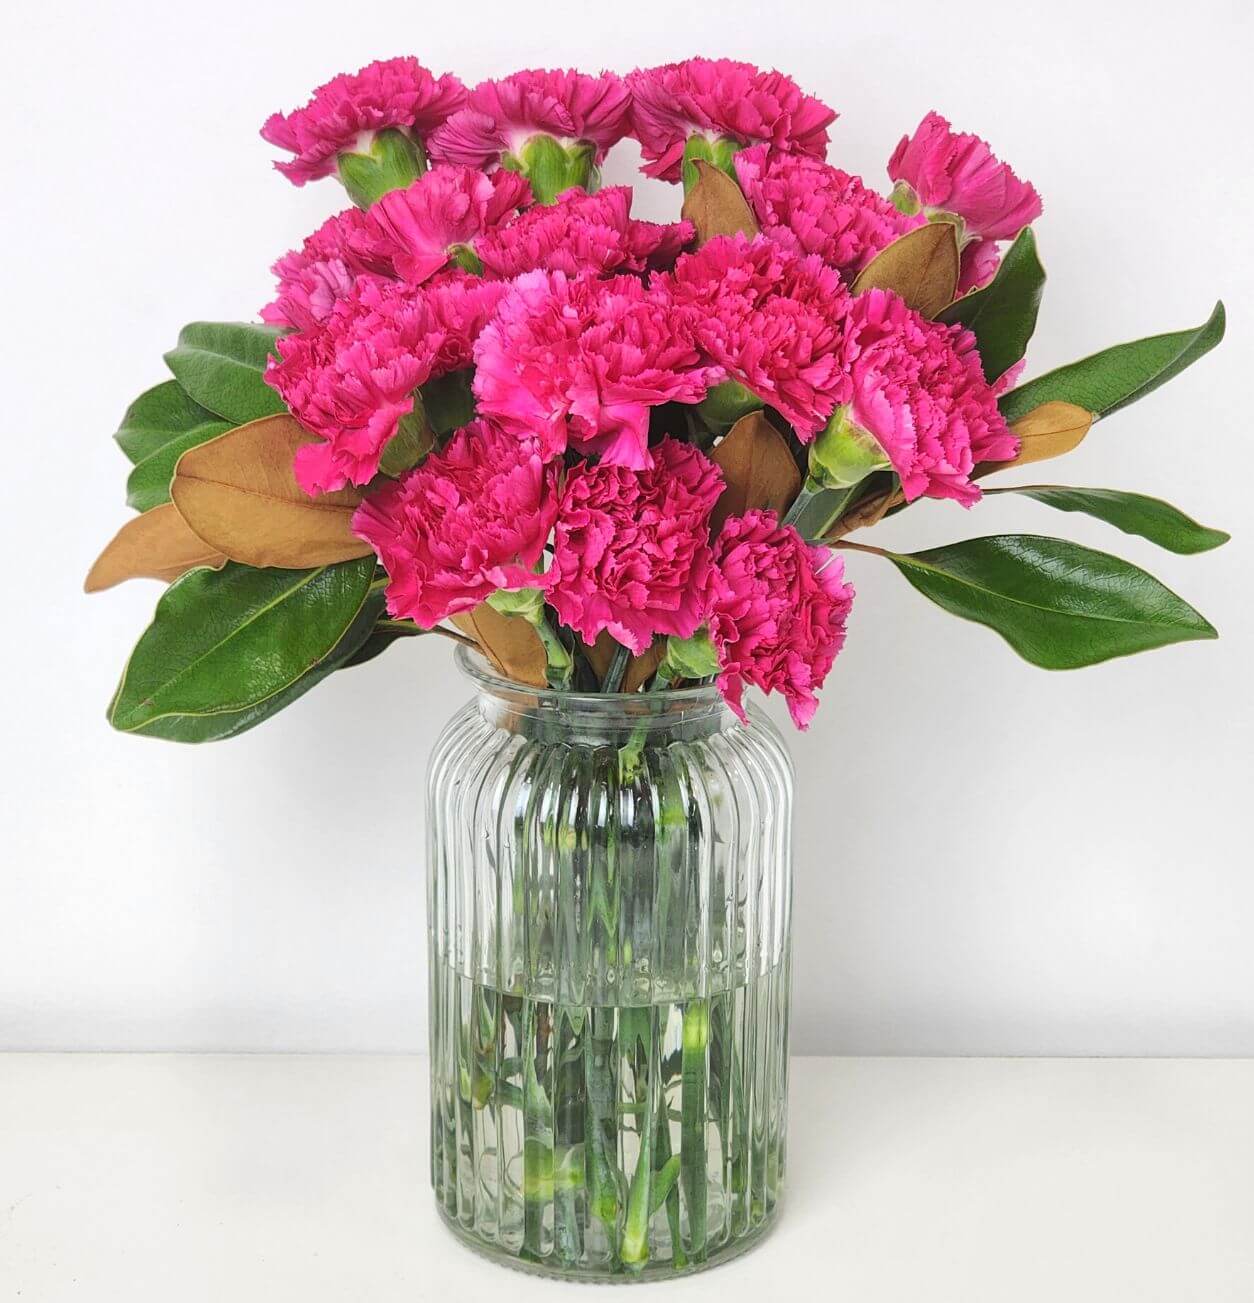 Carnation Floral Arrangement